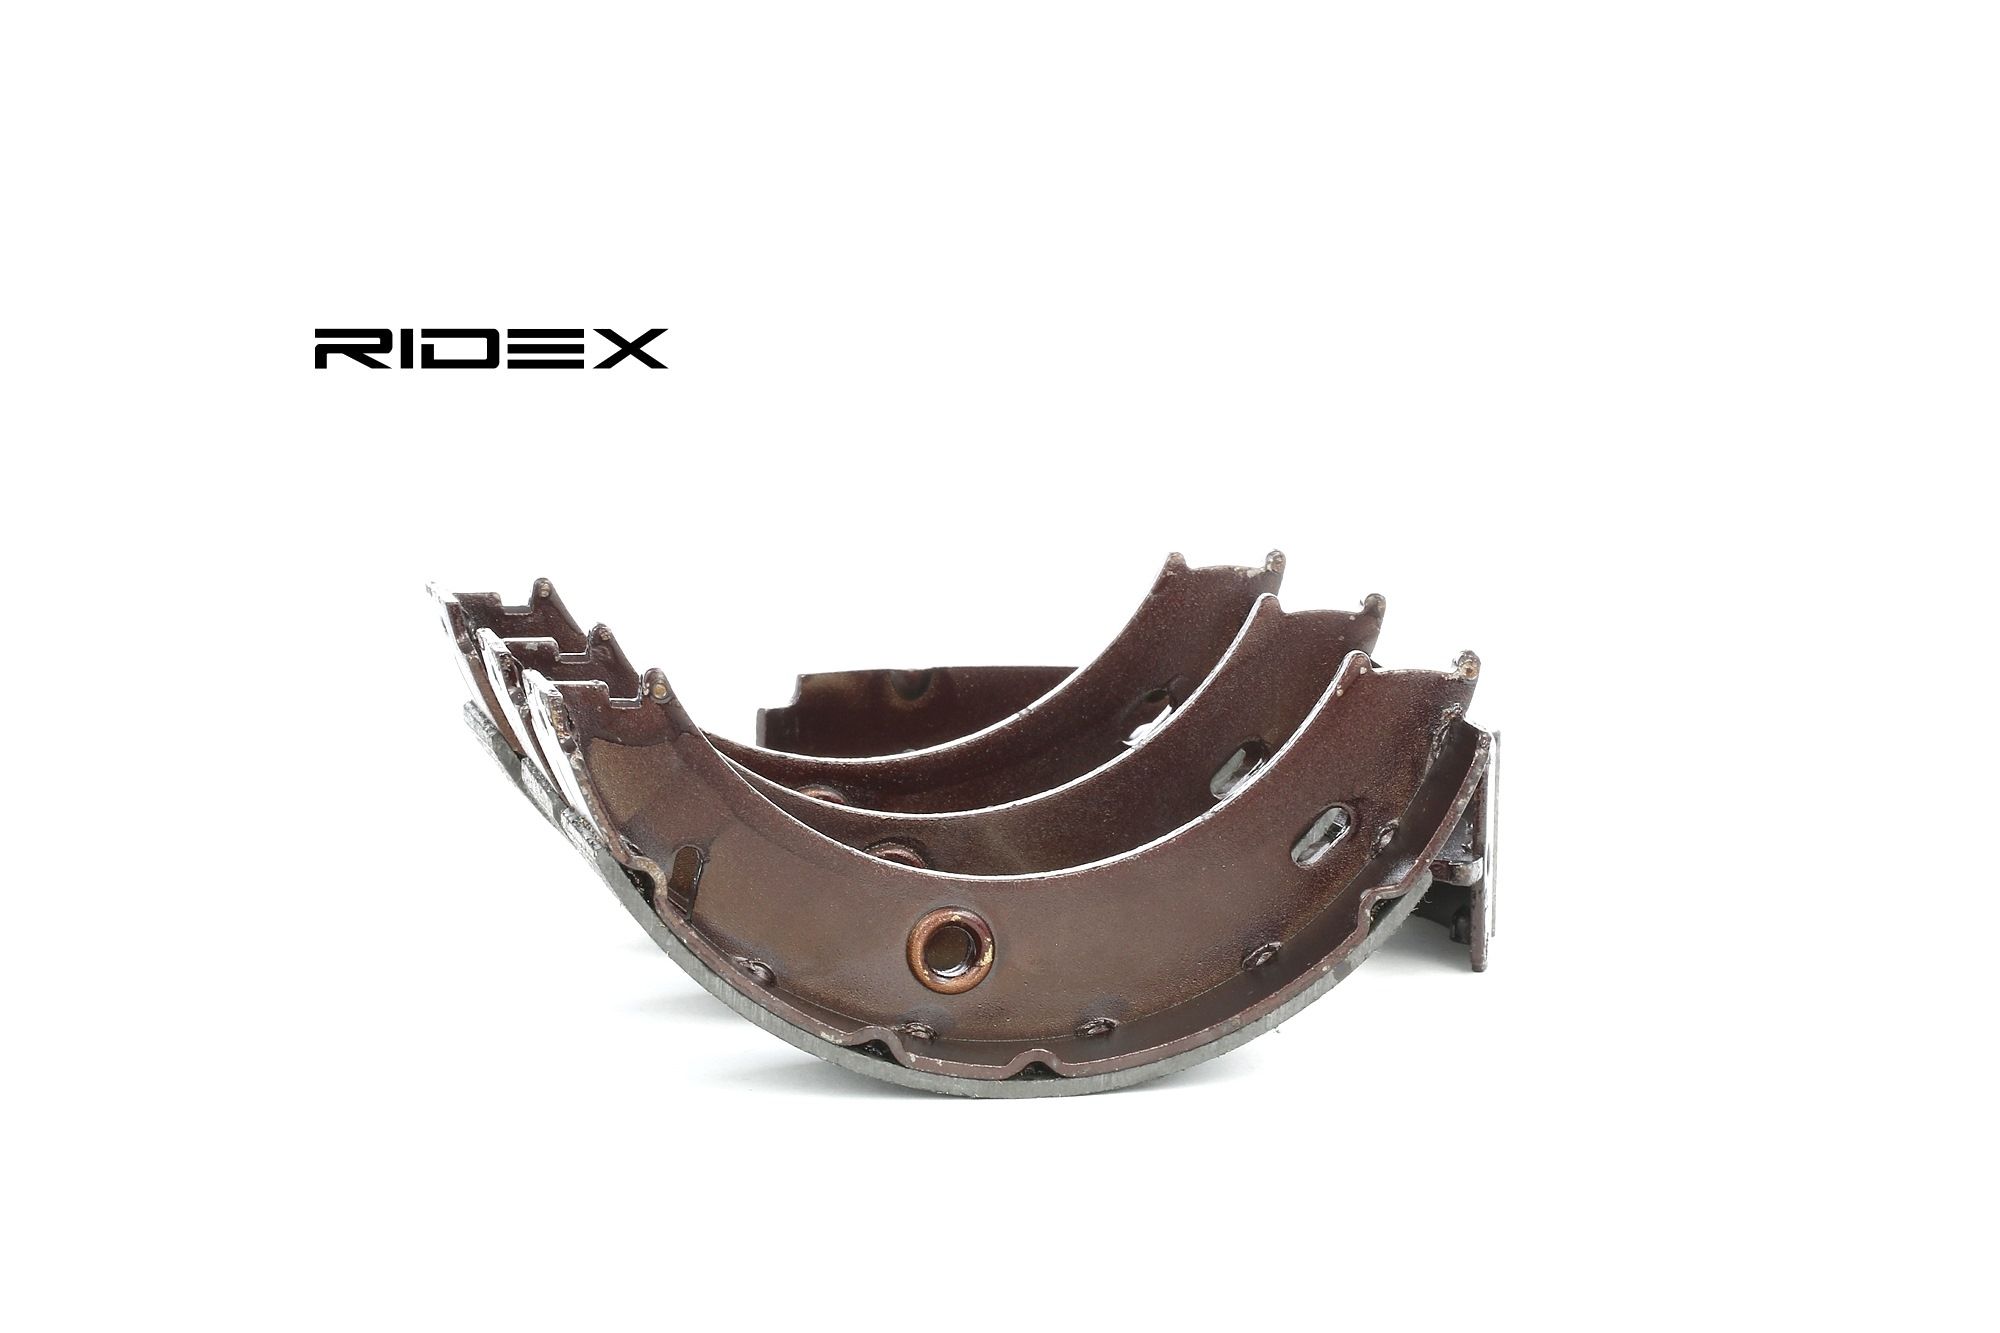 RIDEX 70B0174 originali VOLKSWAGEN Kit ganasce freno Assale posteriore, Ø: 170 x 40 mm